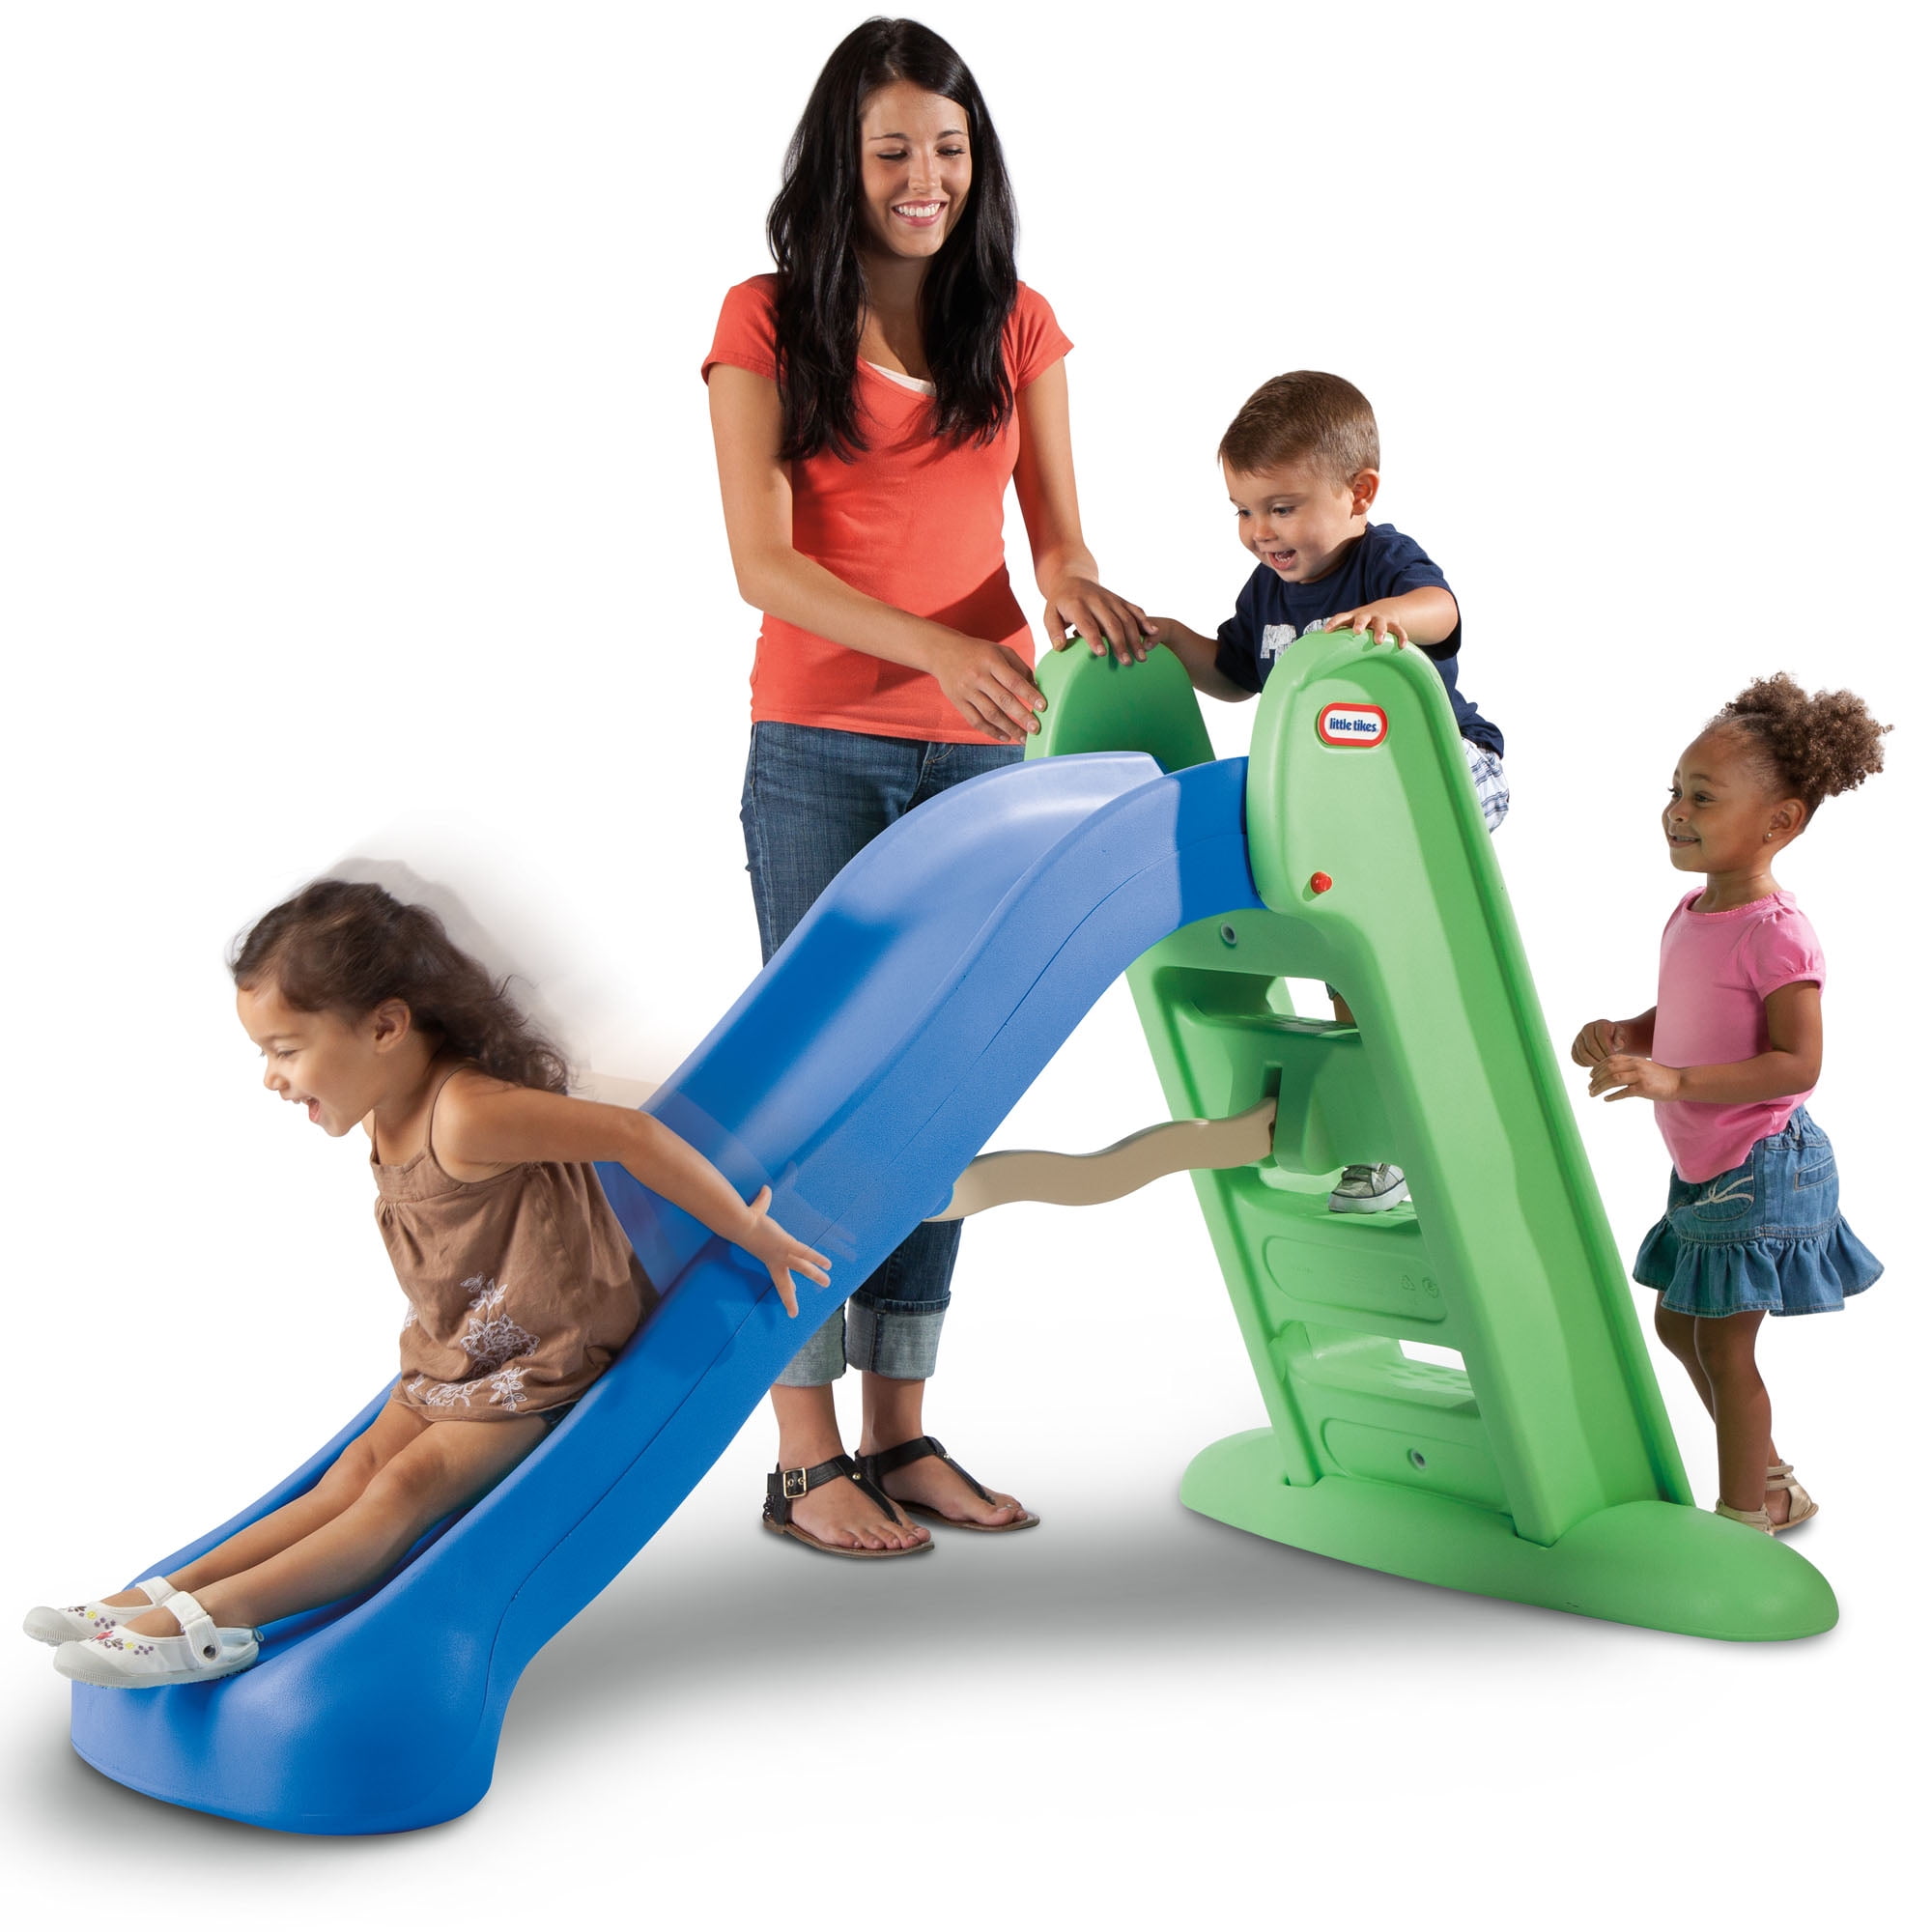 Rider Slide Children's Slide Playground Play Area Garden for Indoor and outdoor 